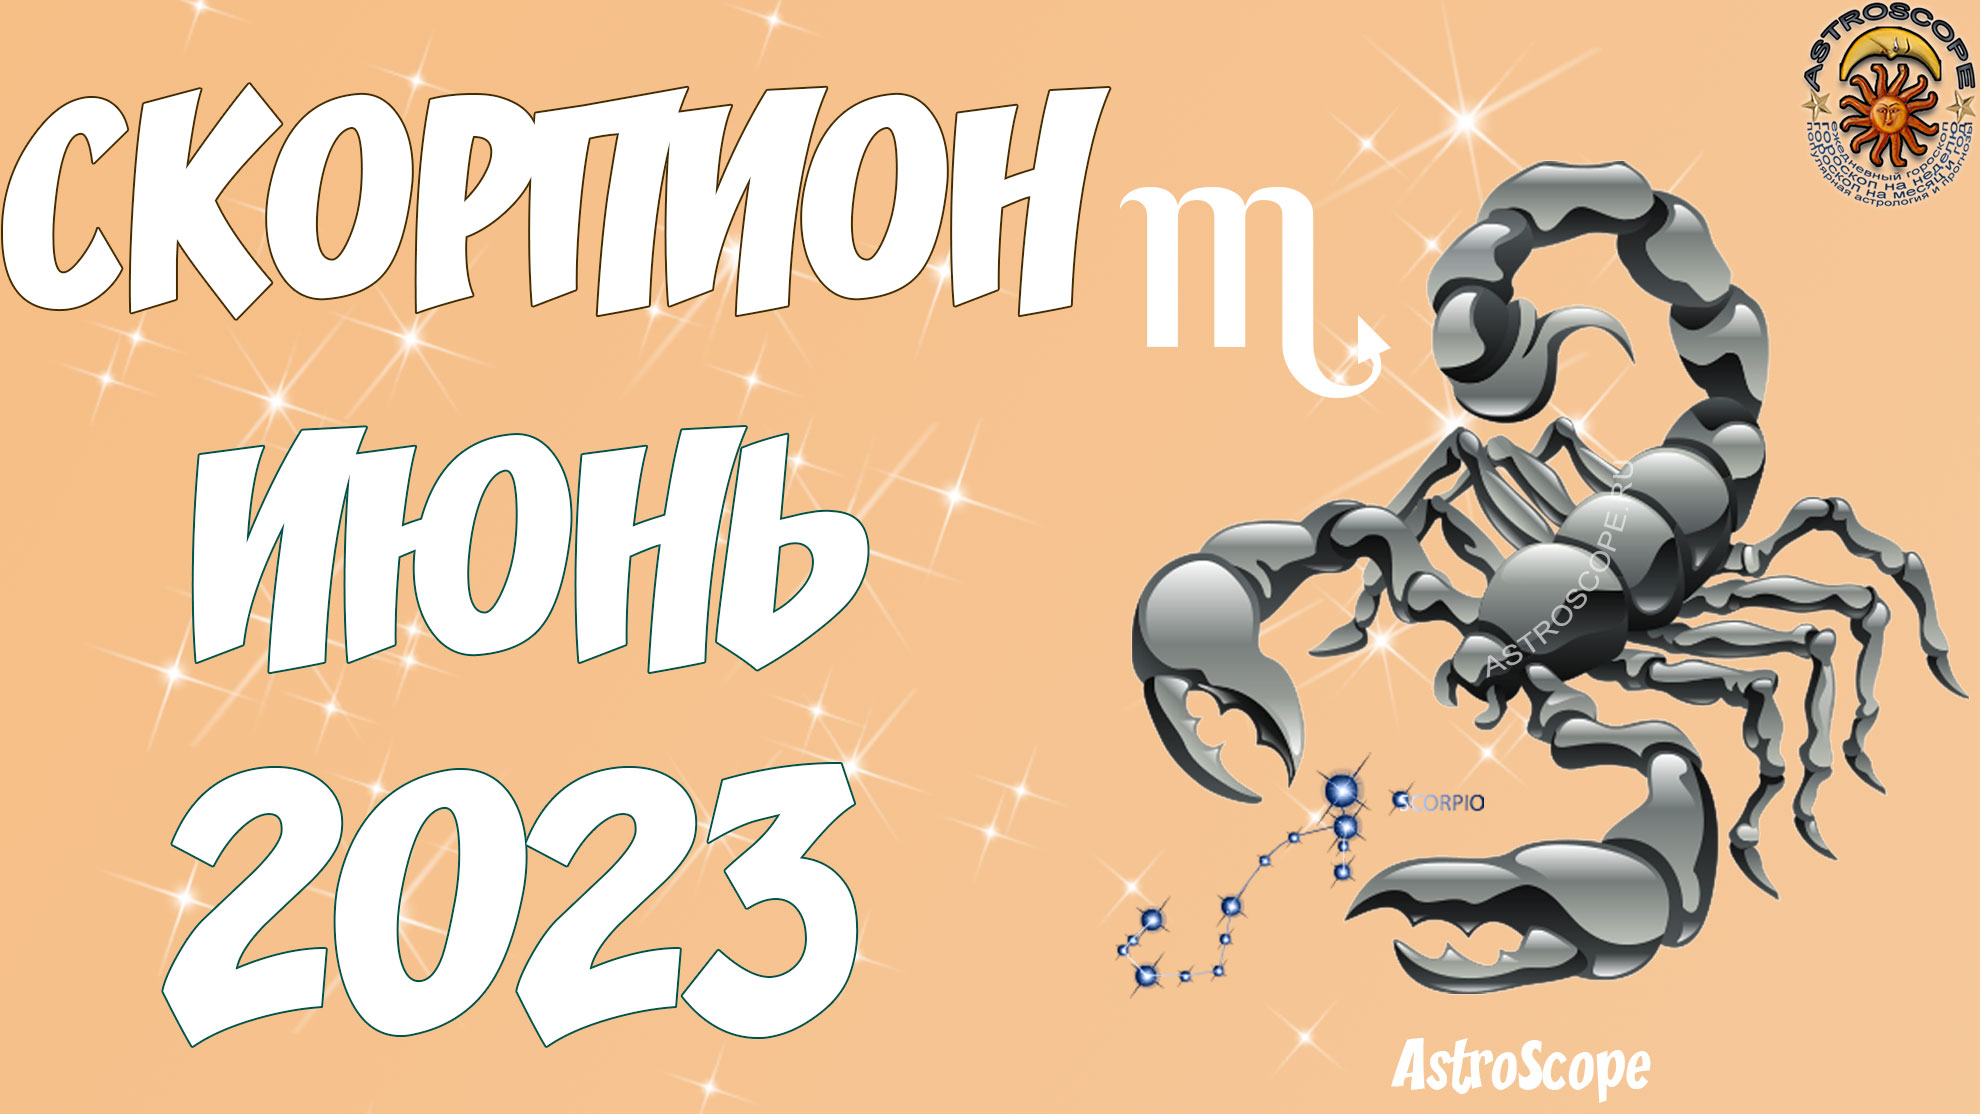 Гороскоп на 3 апреля 2024 скорпион